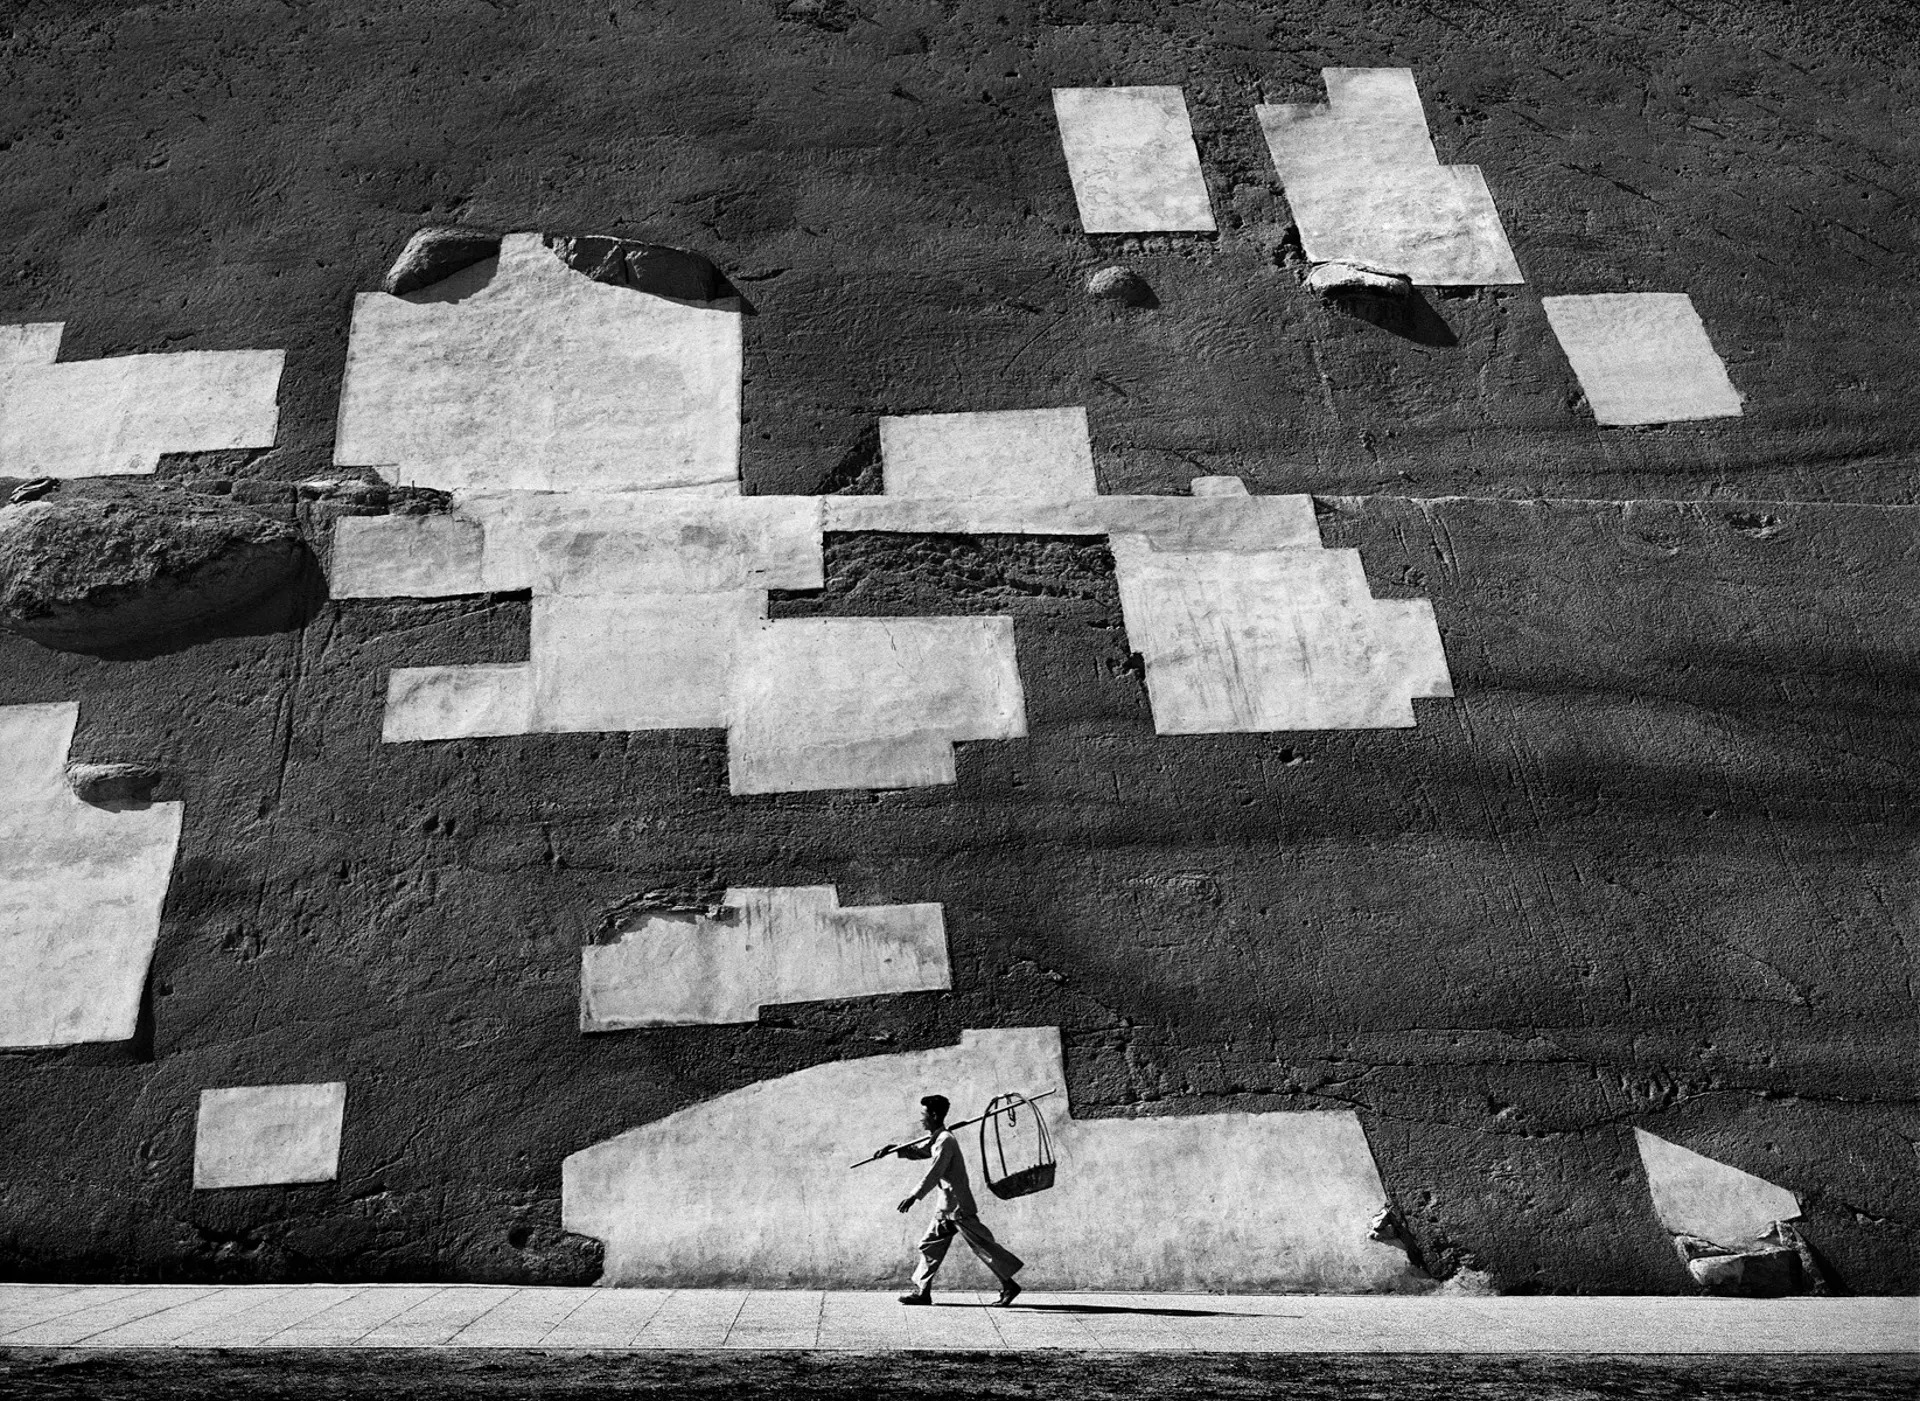 Muster (山坡圖案), Hong Kong, 1956